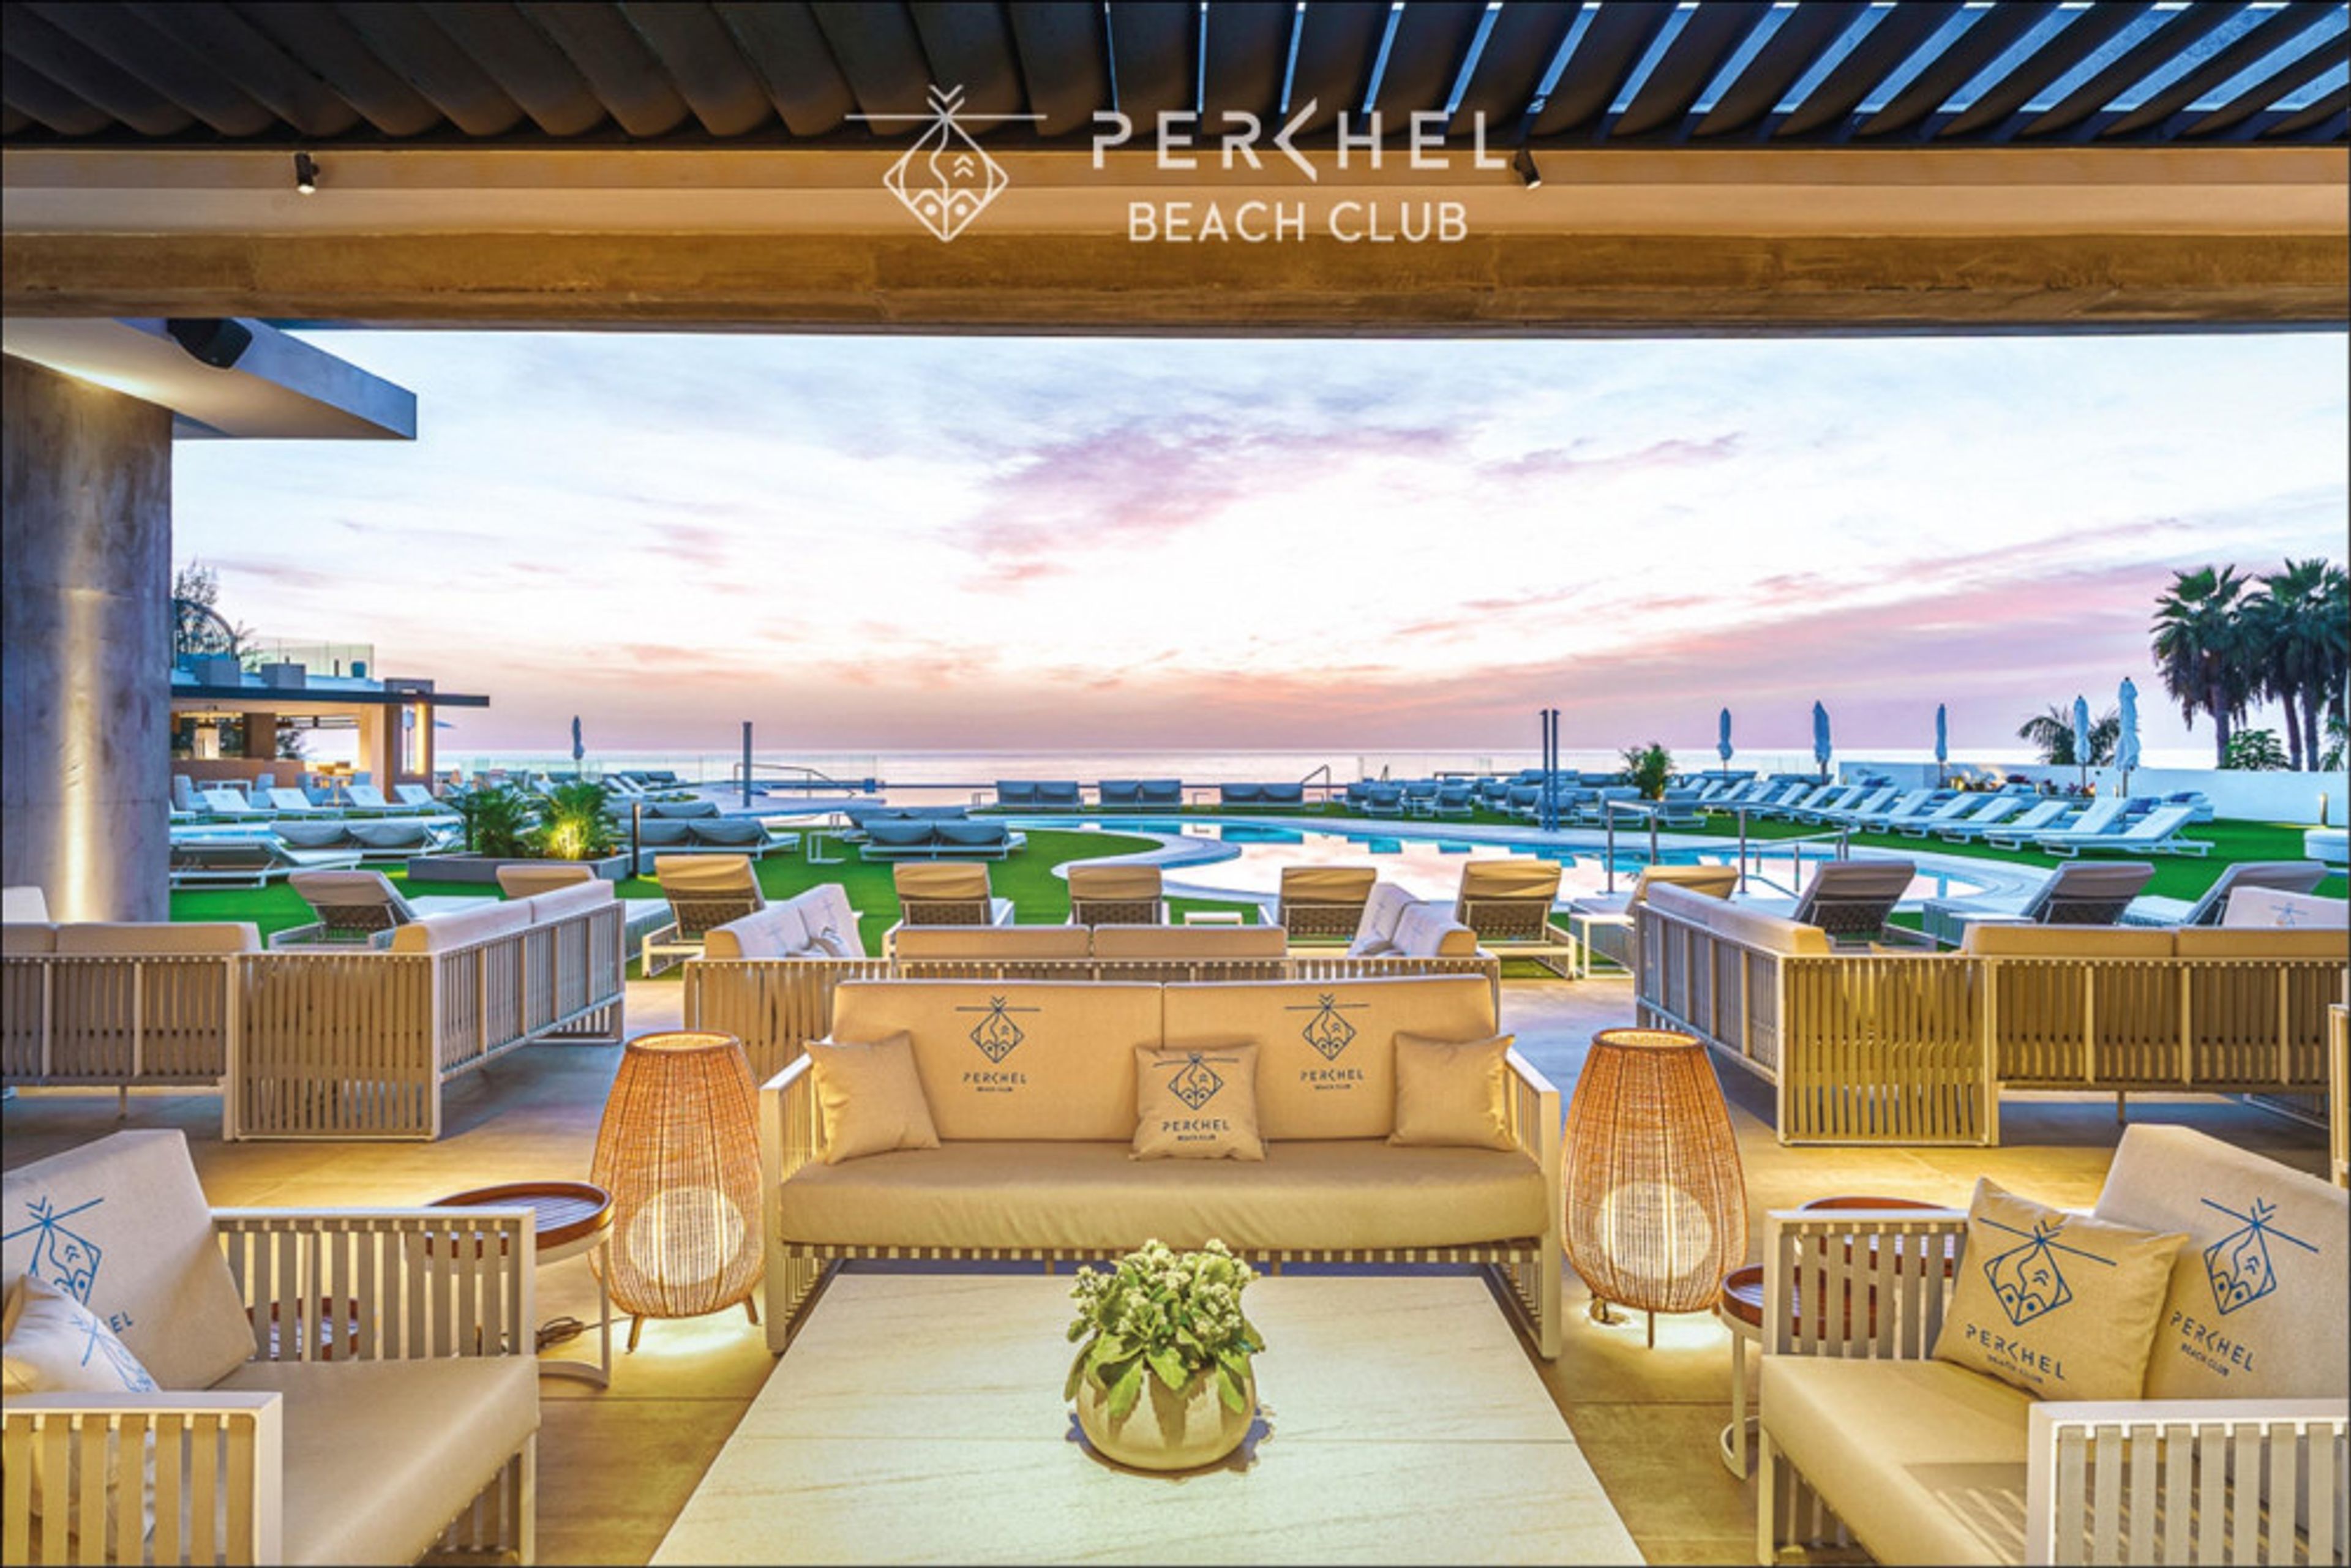 Resort Cordial Santa Águeda & Perchel Beach Club foto 2